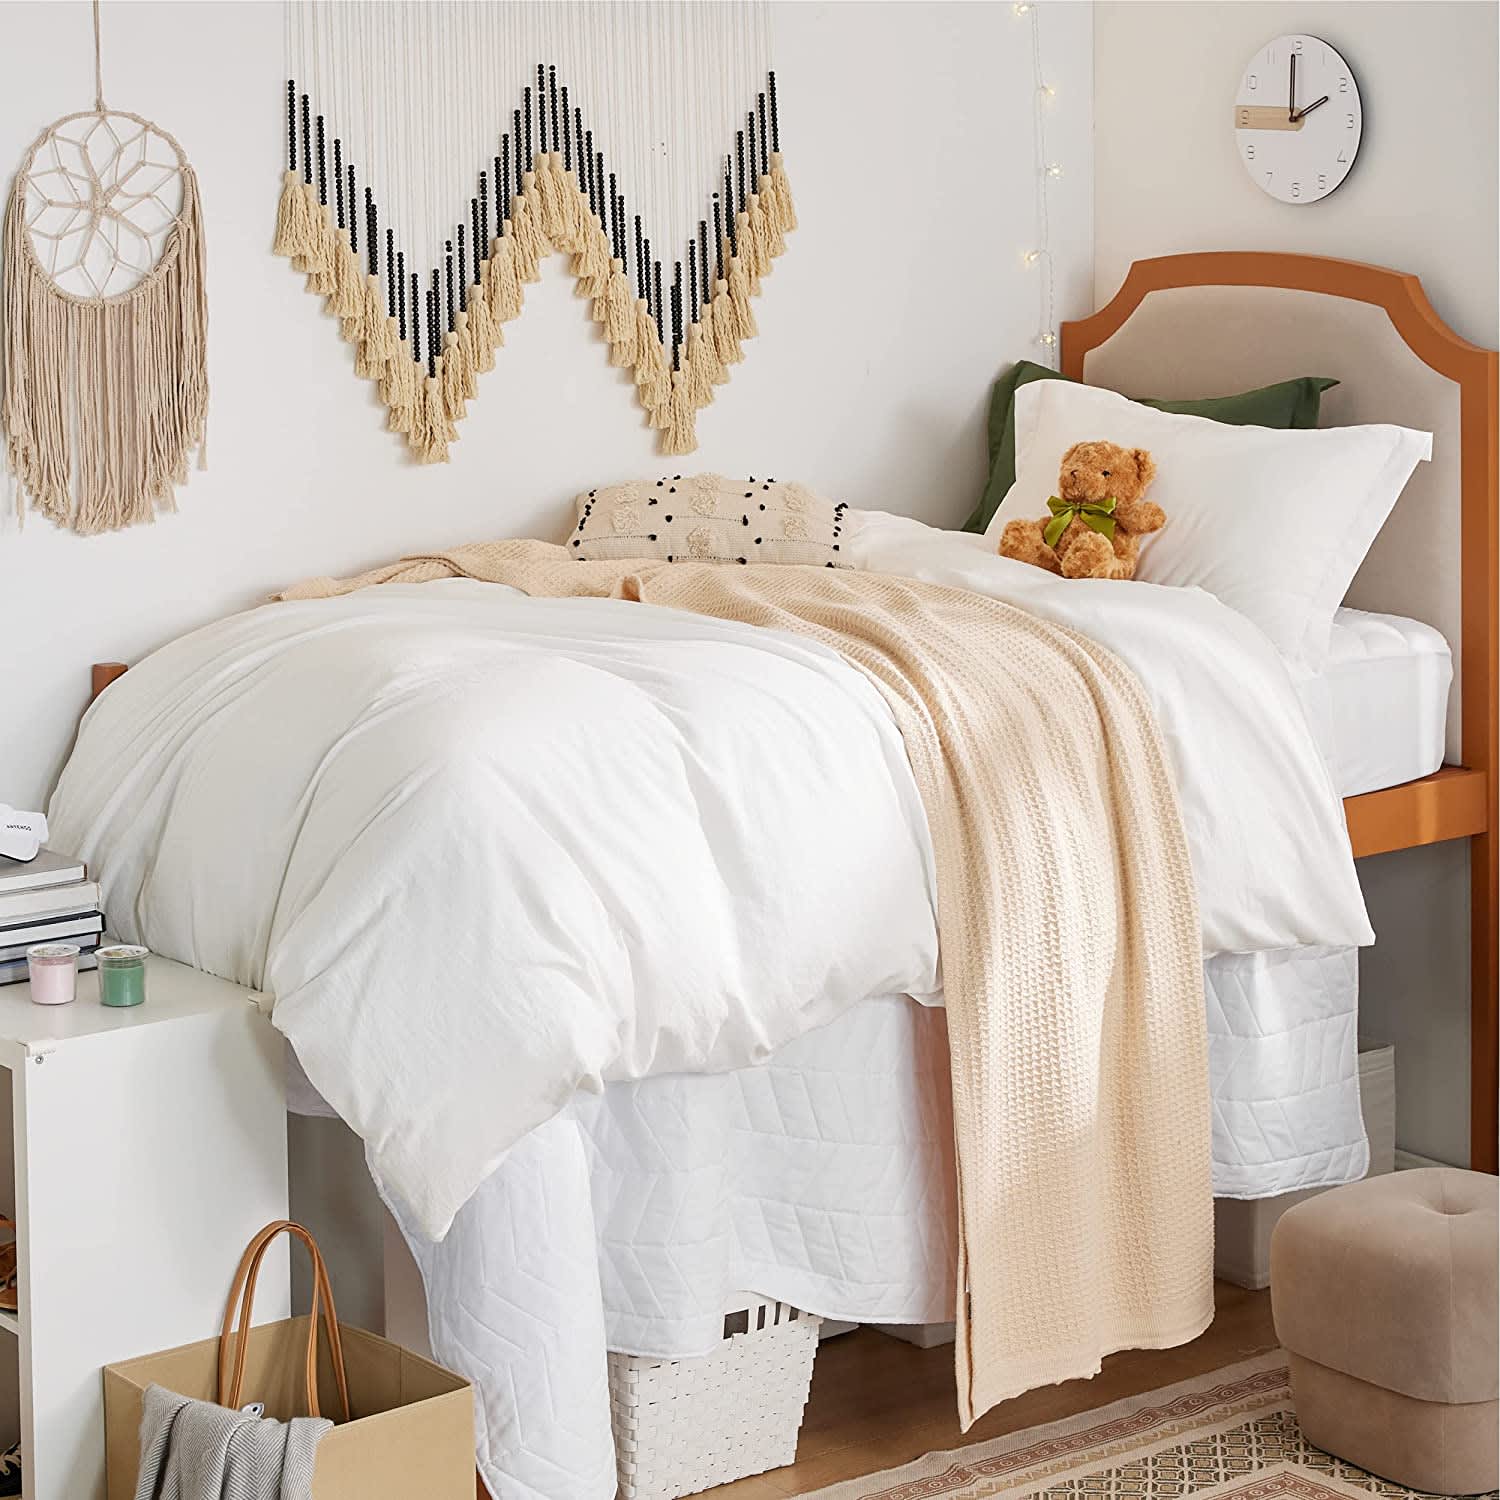 Basic College Bedding Ideas XL Twin Comforter Set Shabby Chic Dorm Decor  Textured Bedding